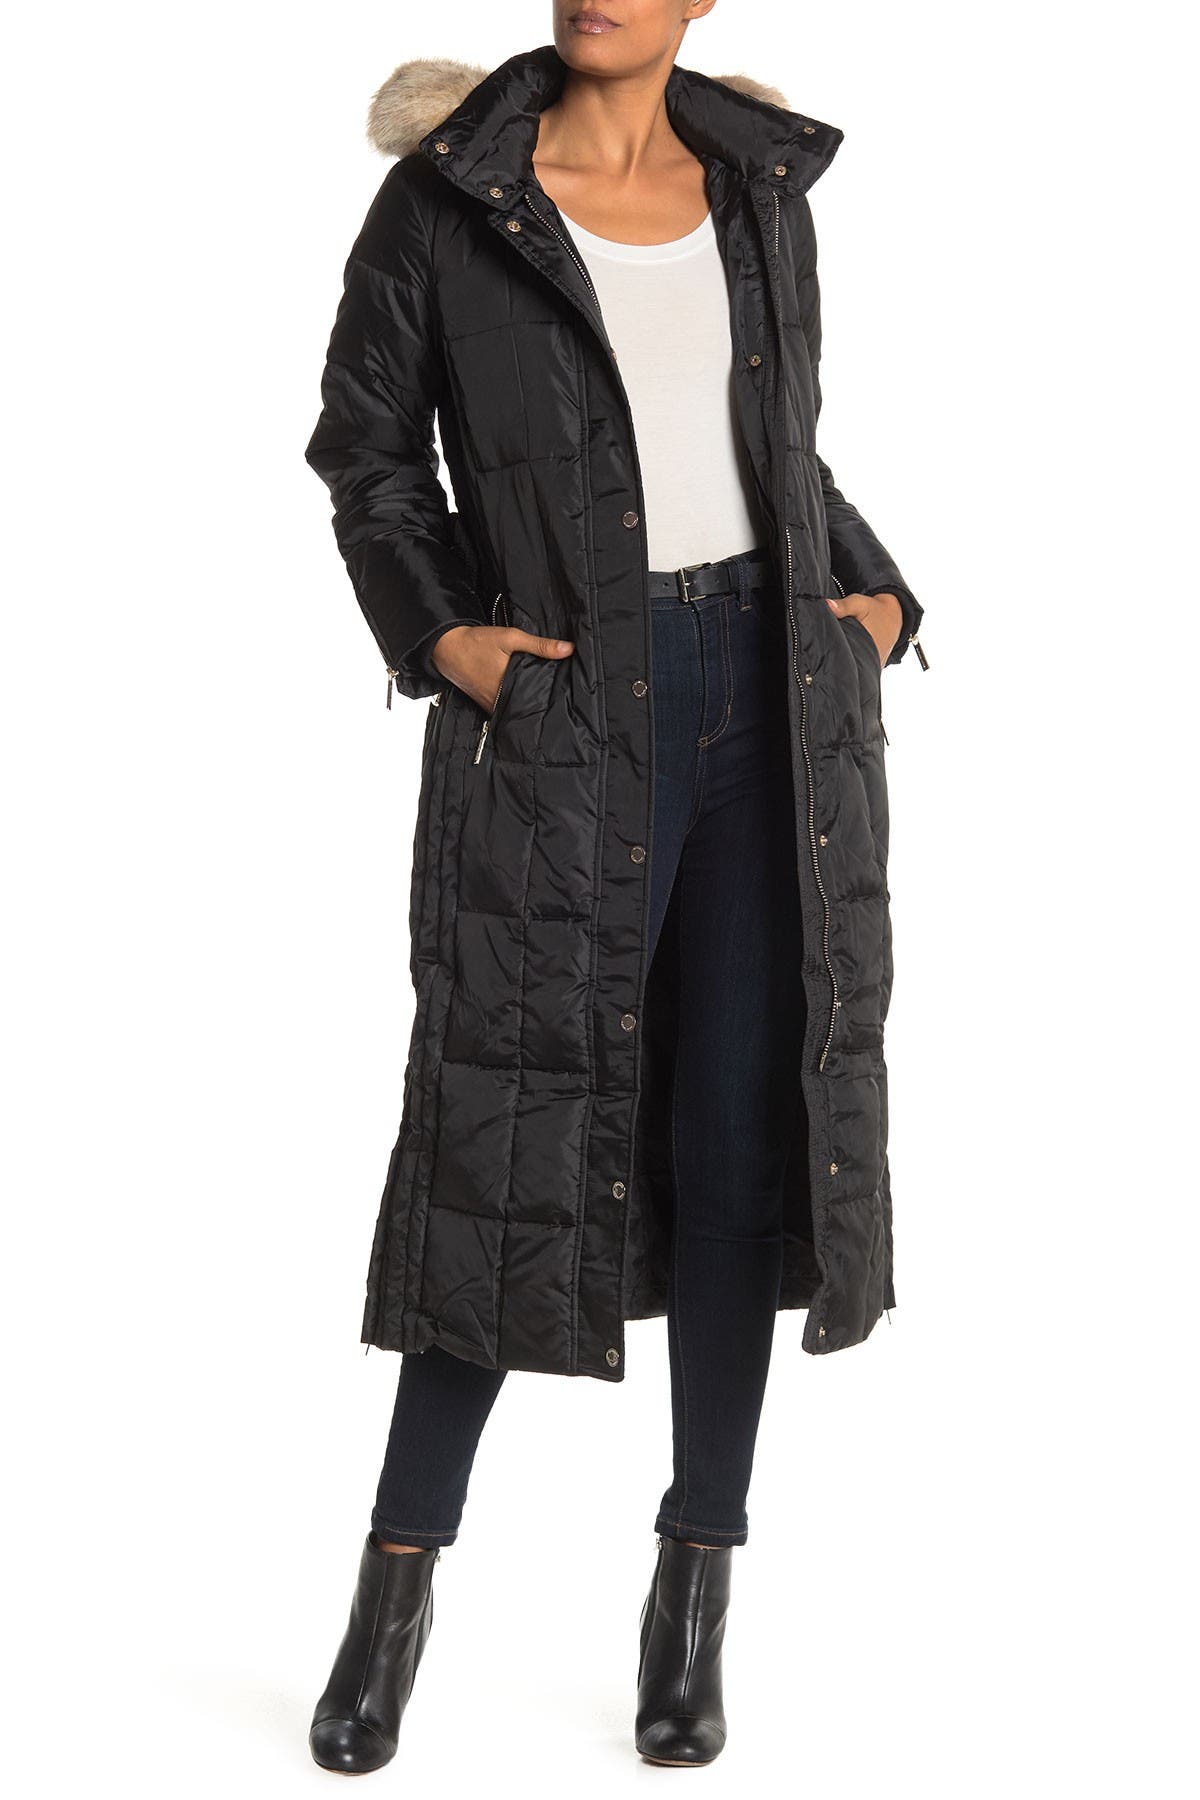 michael kors mid length coat